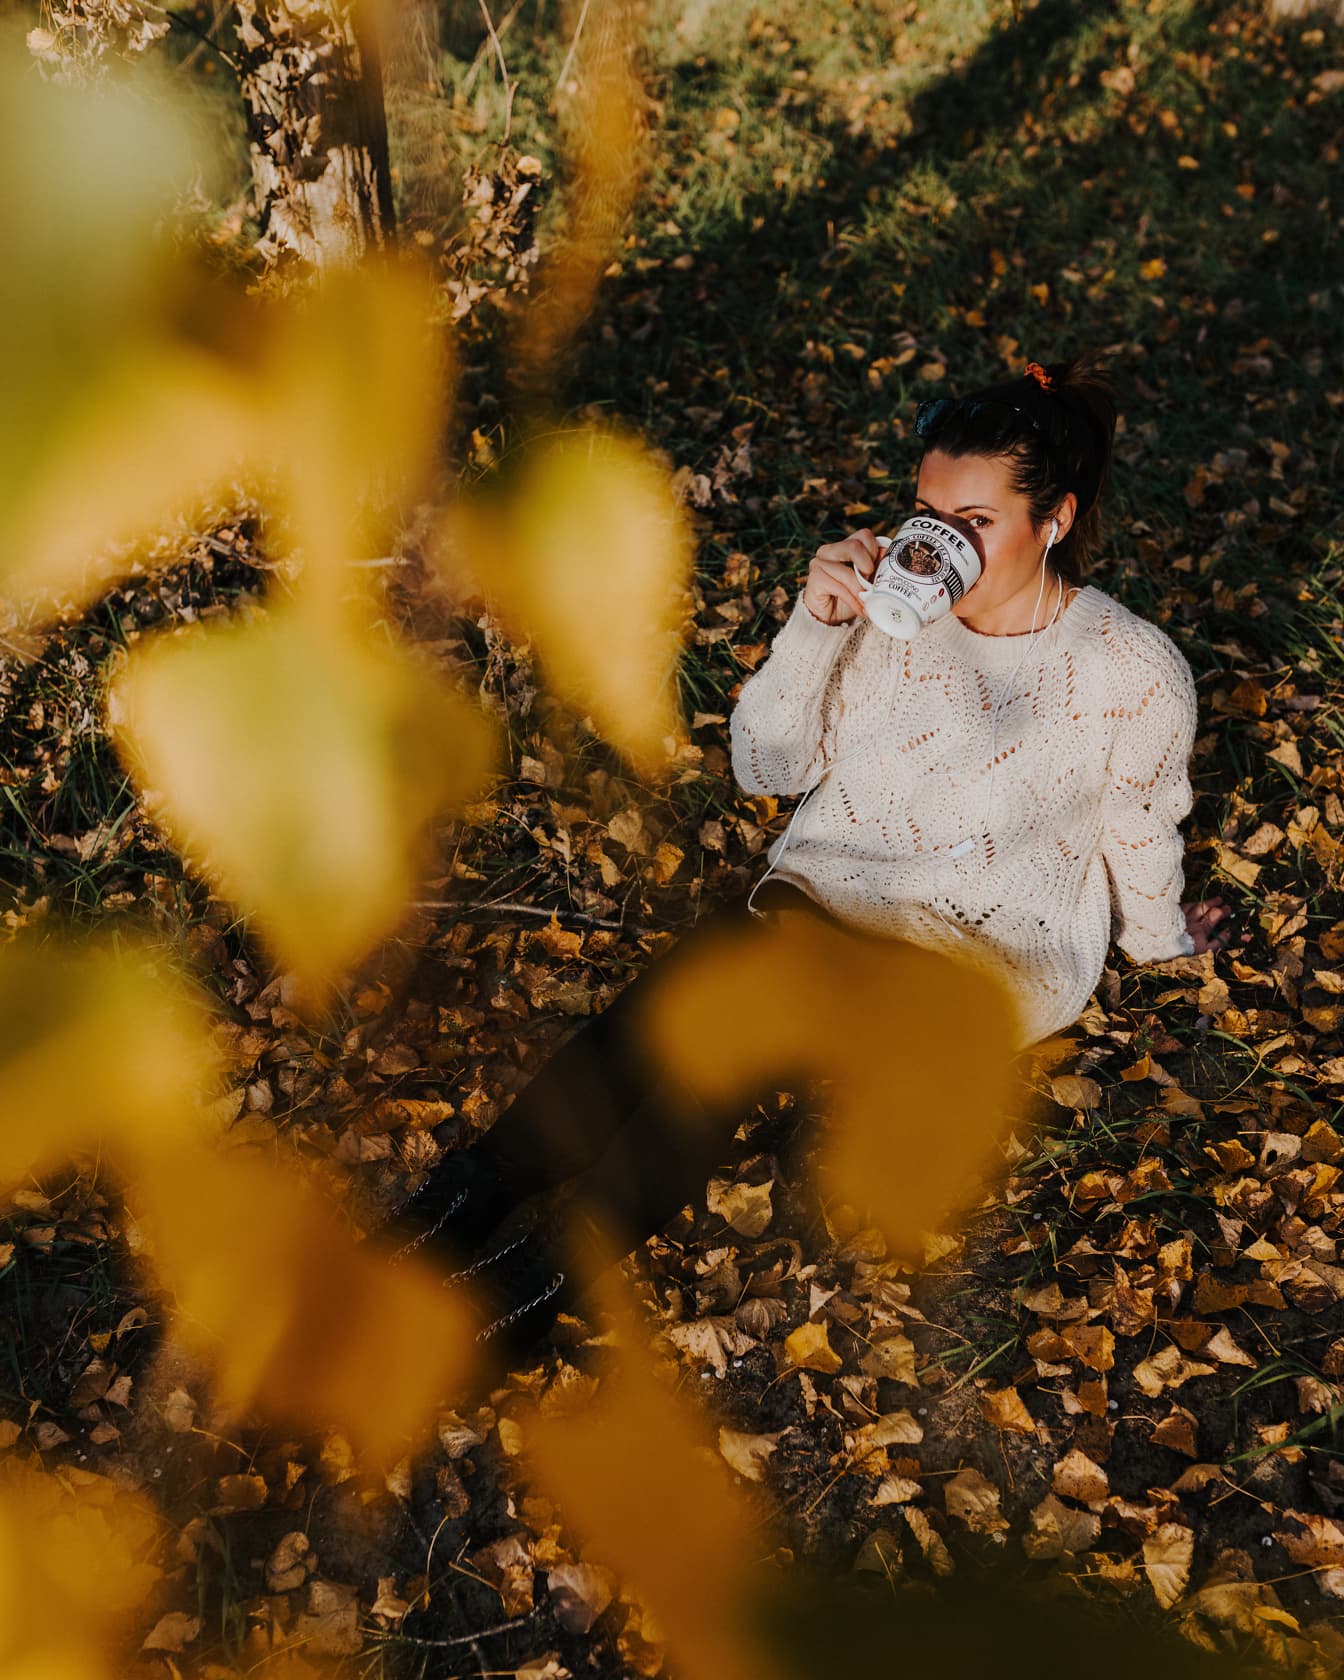 Wanita dengan sweter wol buatan tangan duduk di tanah dan minum dari cangkir kopi besar